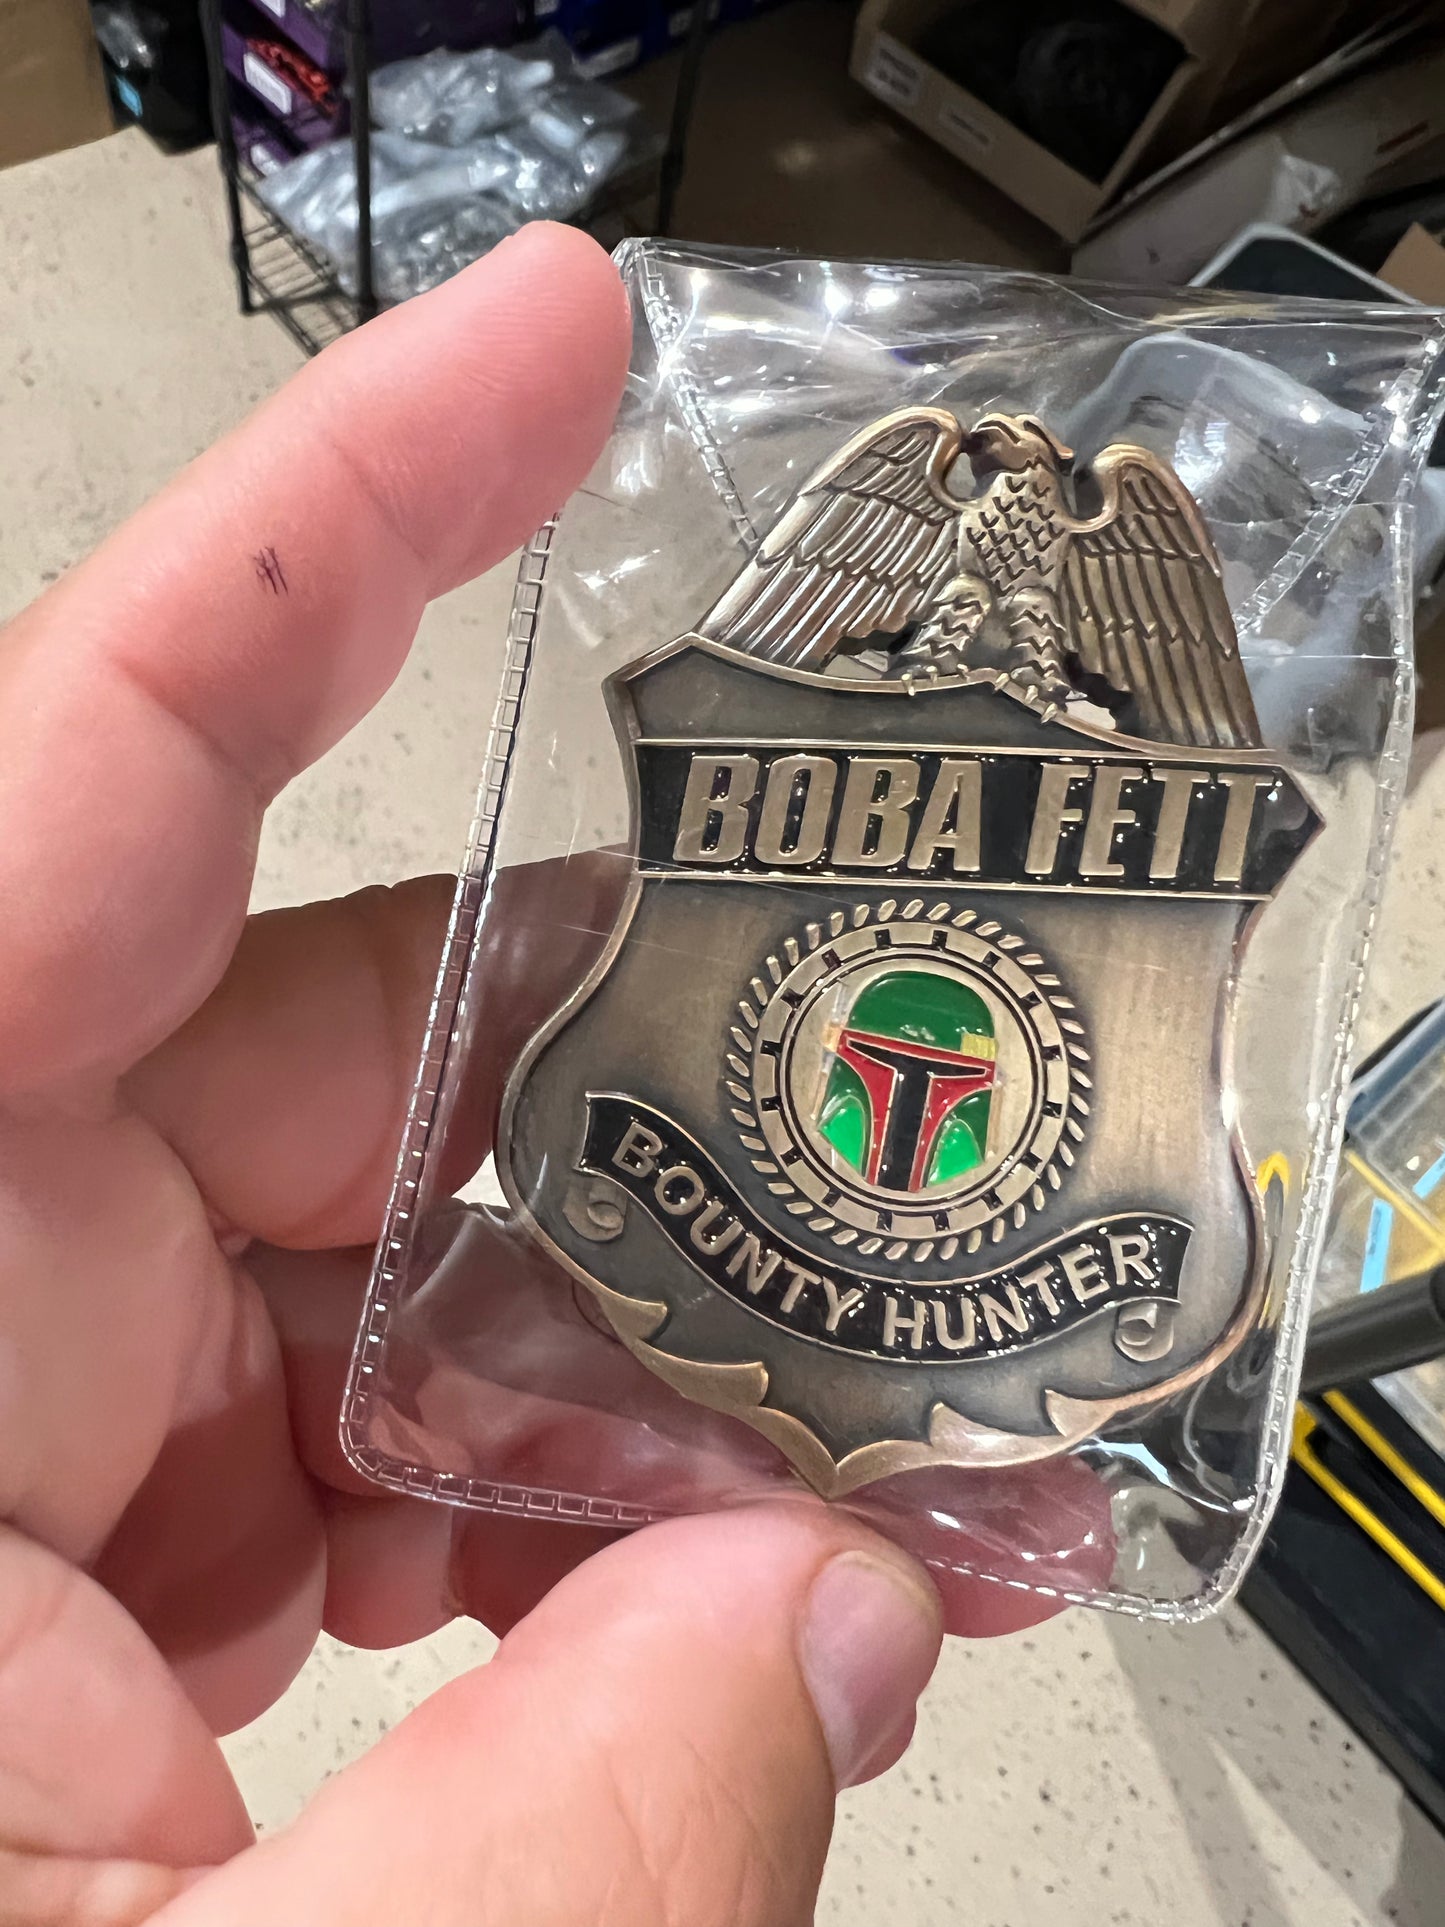 BL16-016 Boba Fett Bounty Hunter Full Size pin